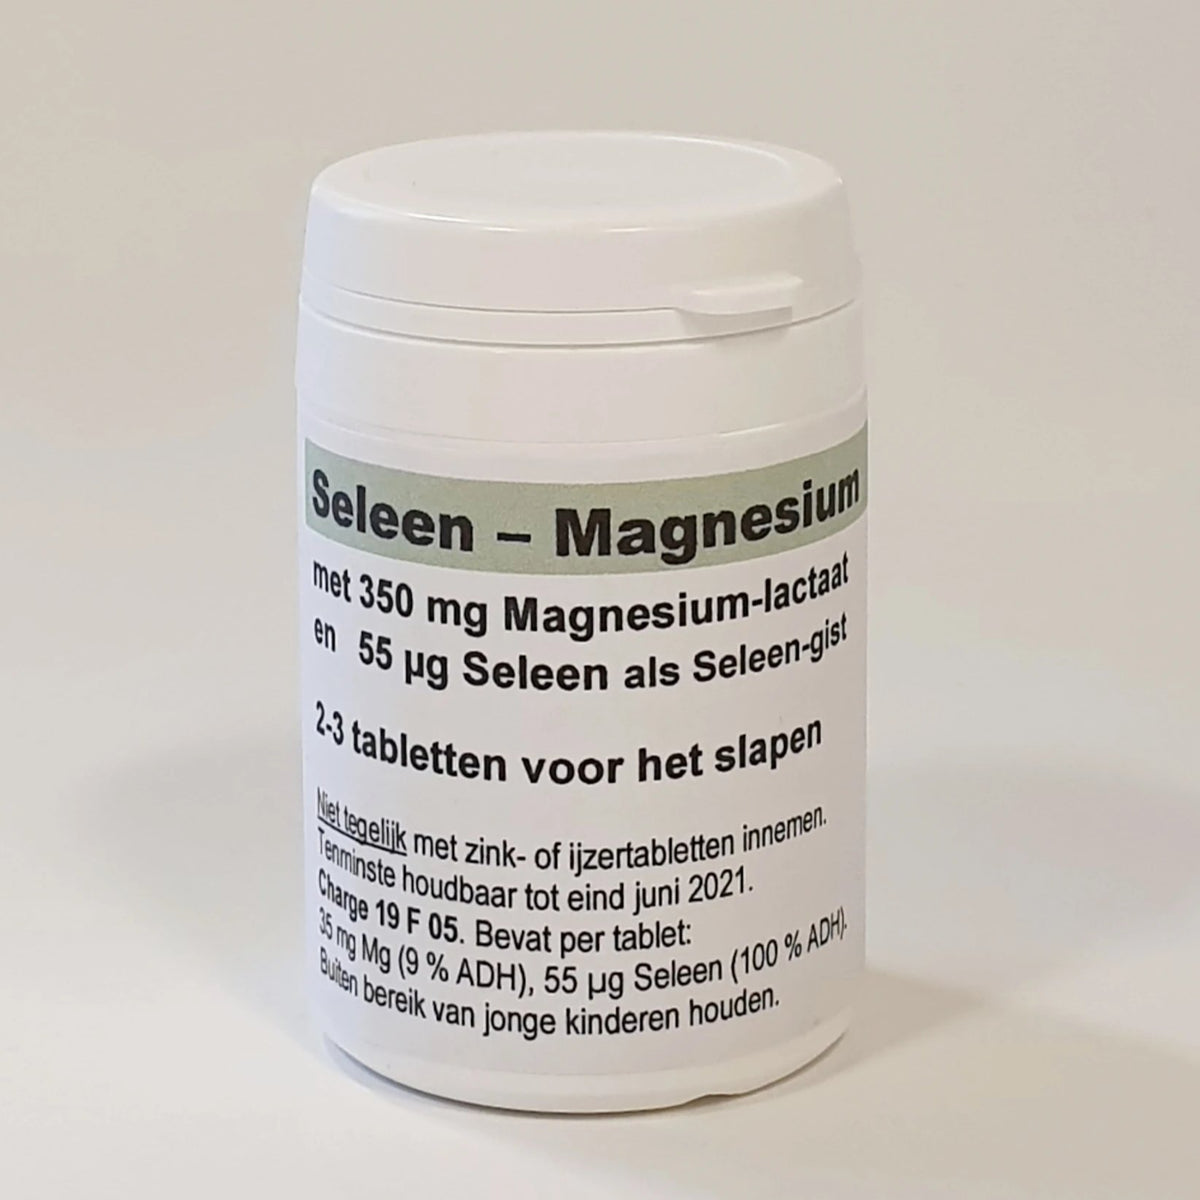 Seleen - Magnesium